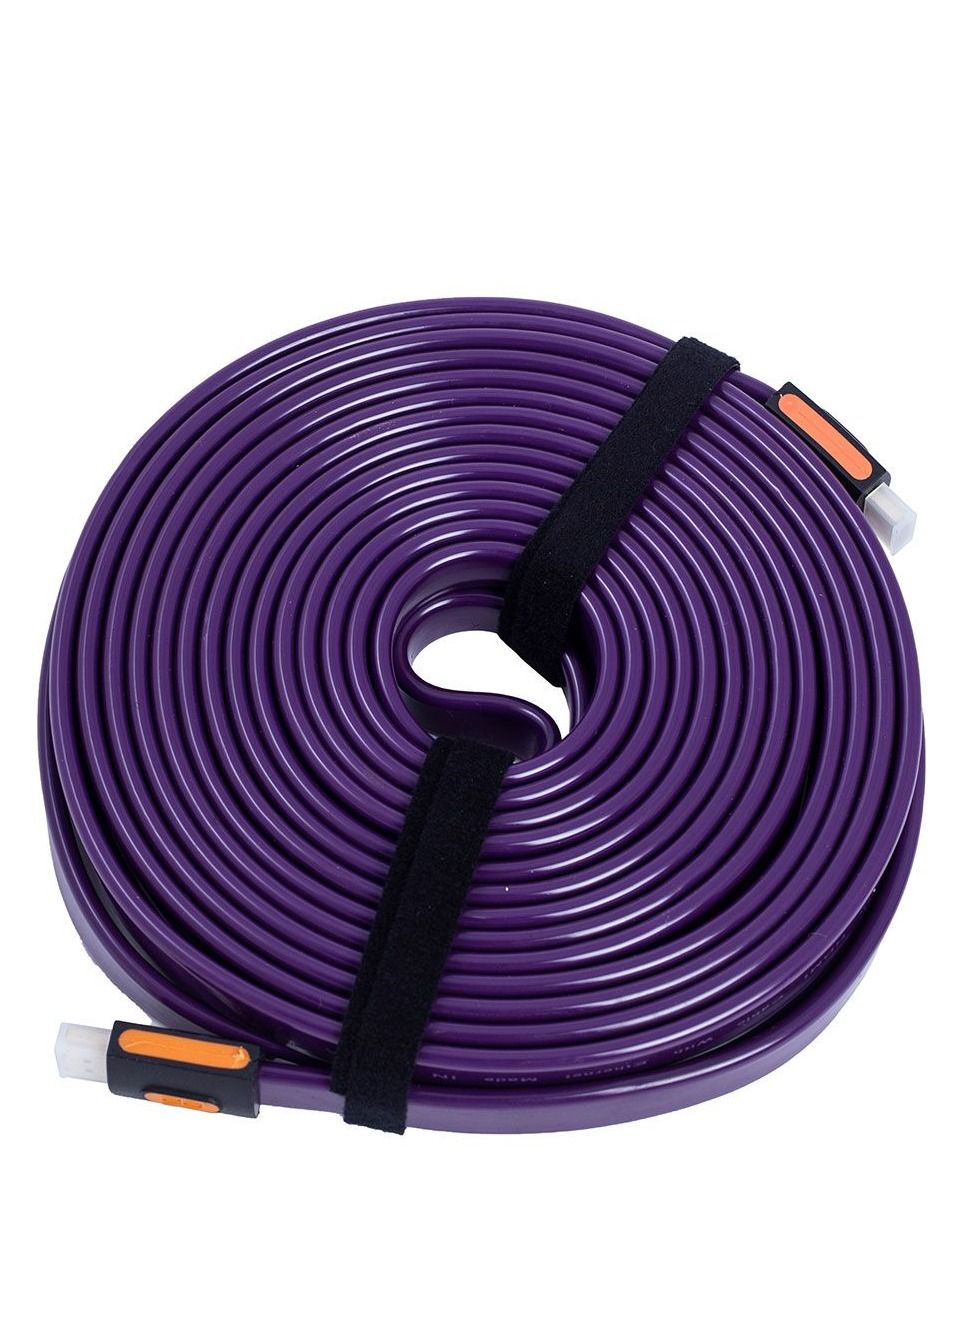 2B HDMI Cable, 10 Meters, Purple- CV873